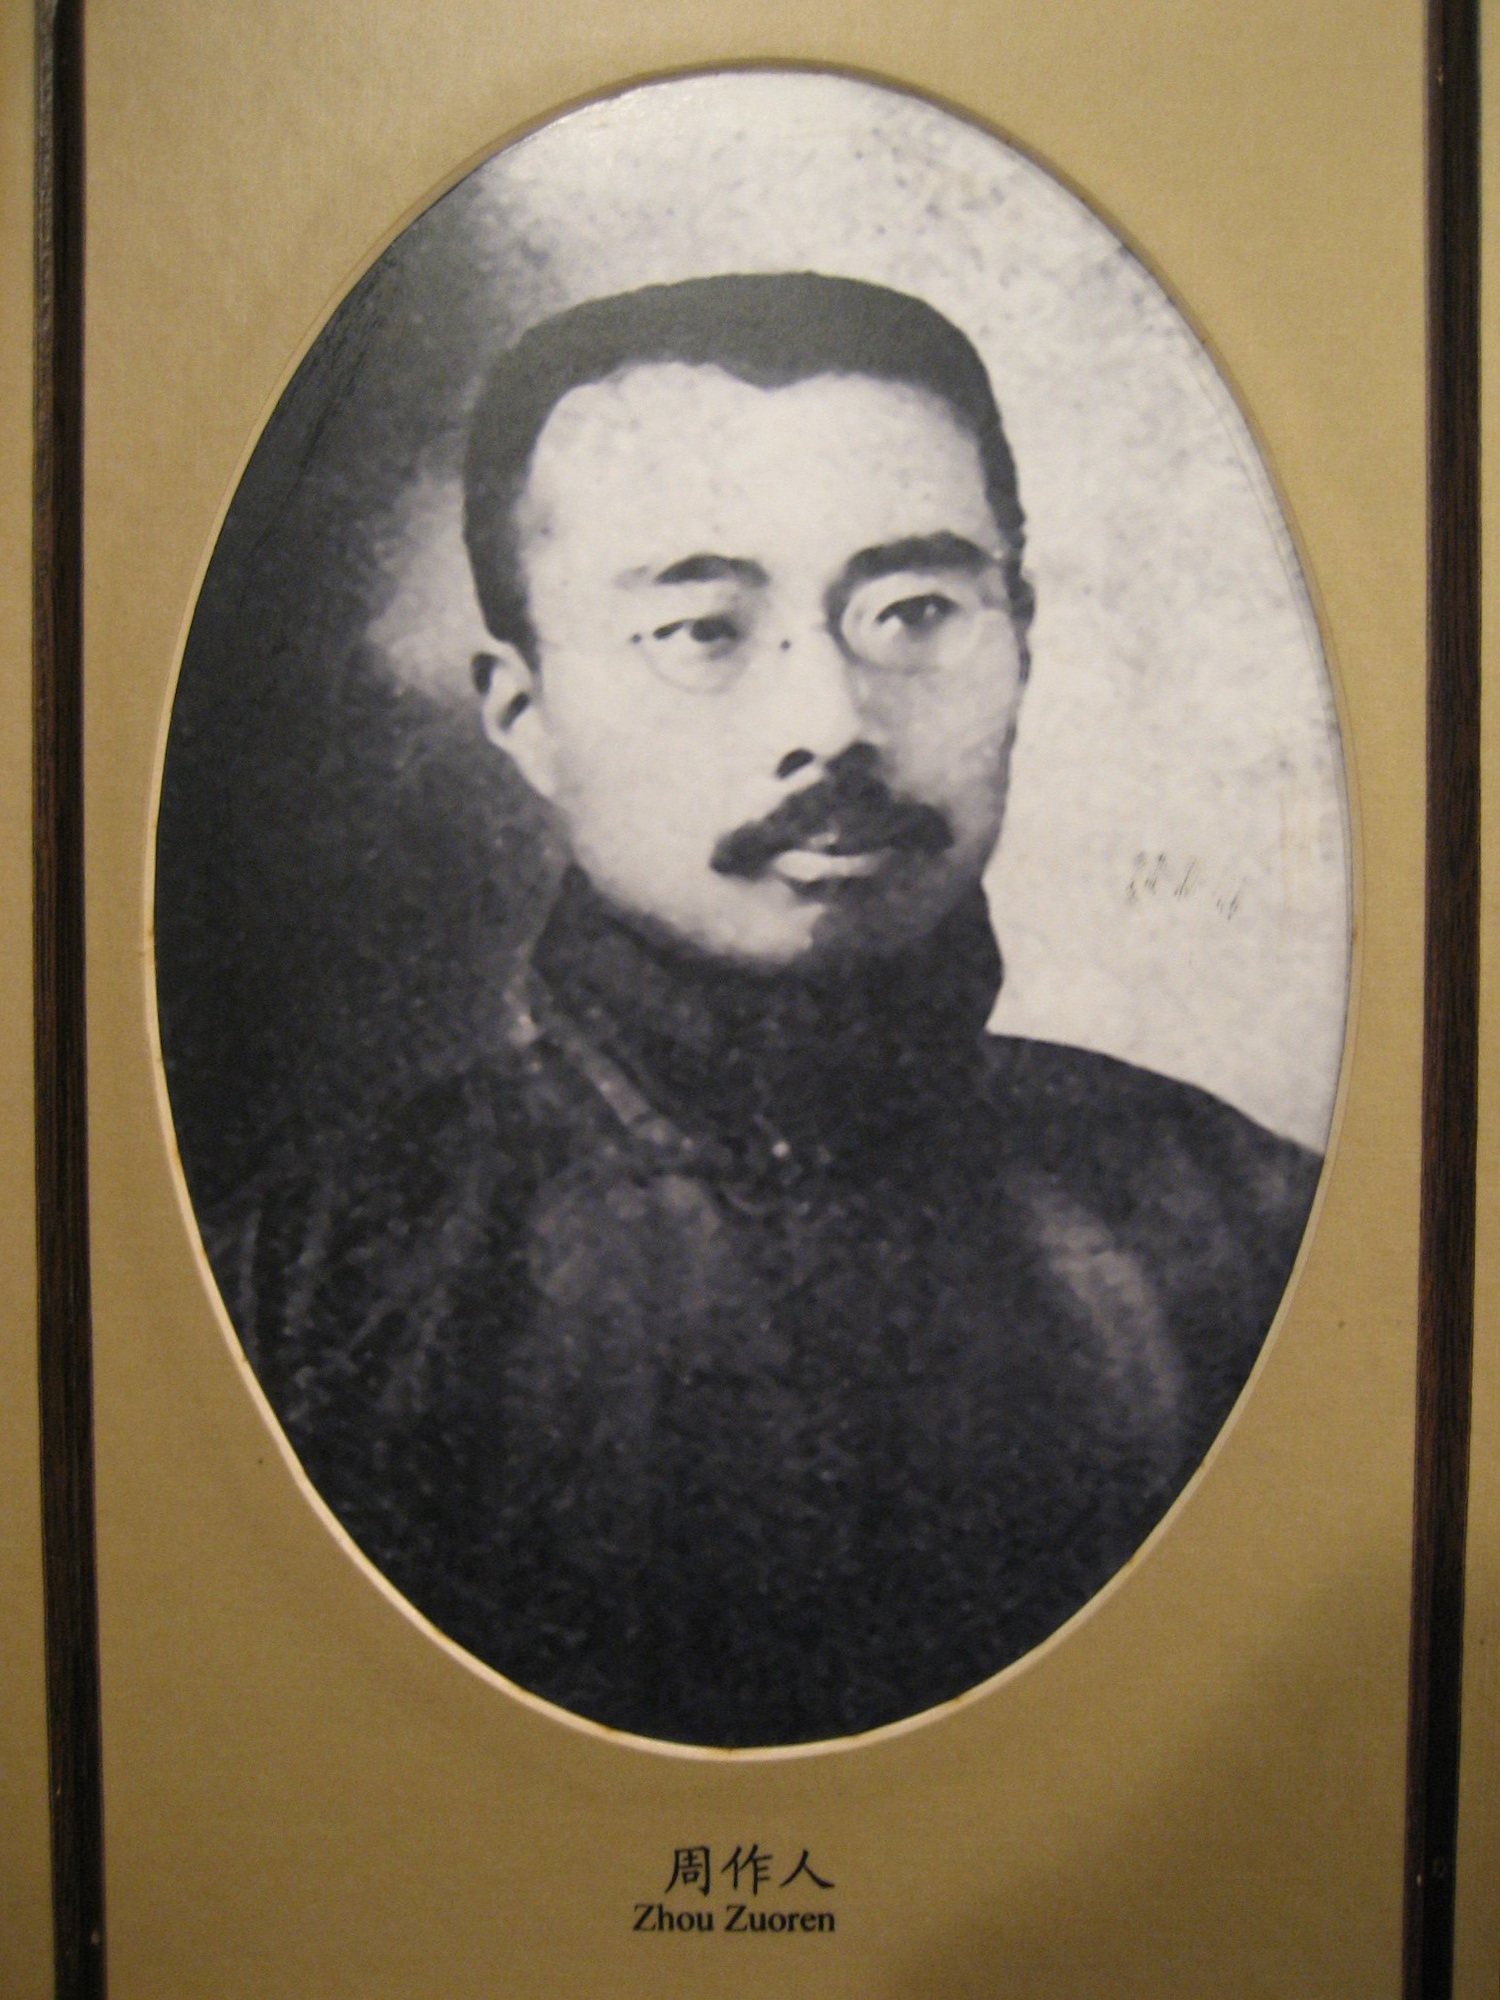 Zhou Zuoren, Chinese author and translator (d. 1967) was born on January 16, 1885.